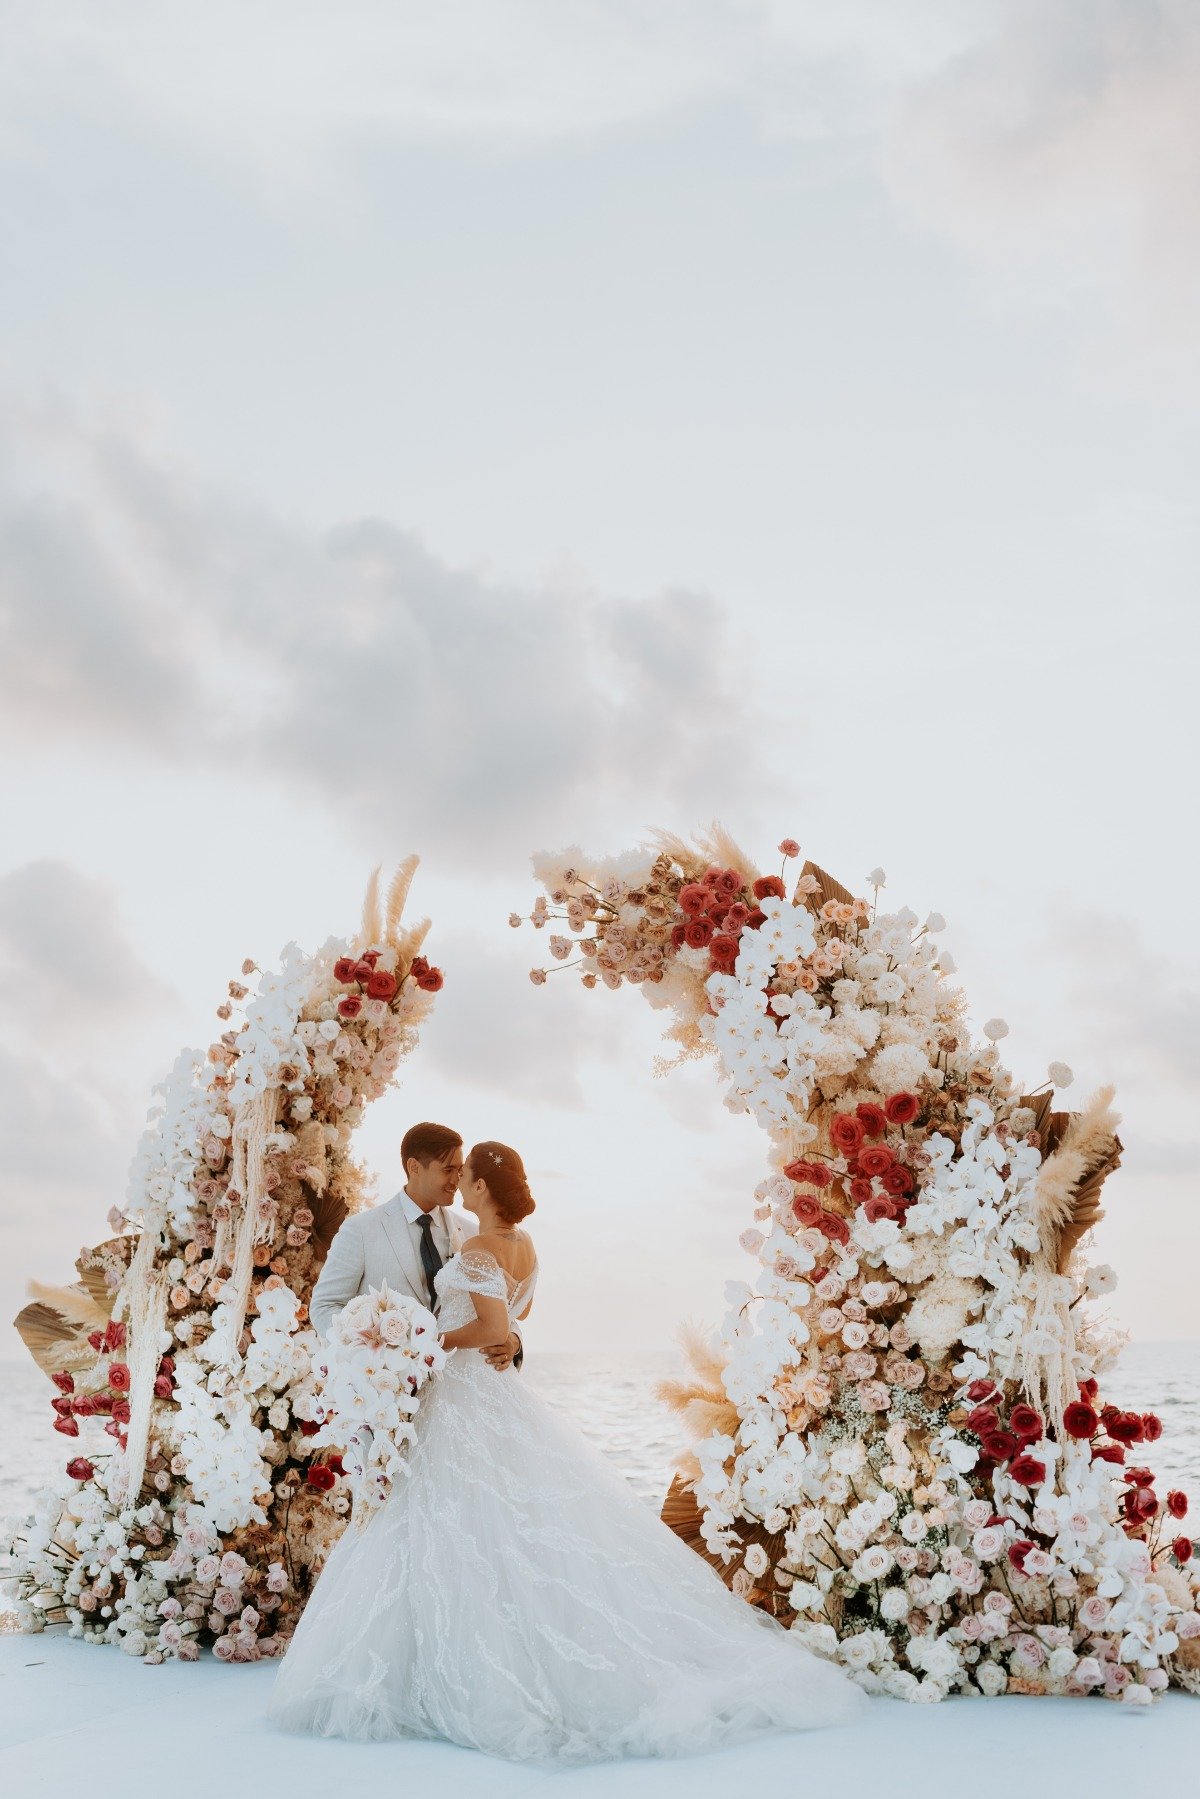 How to Edit Stunning Honeymoon Photos On Your Phone